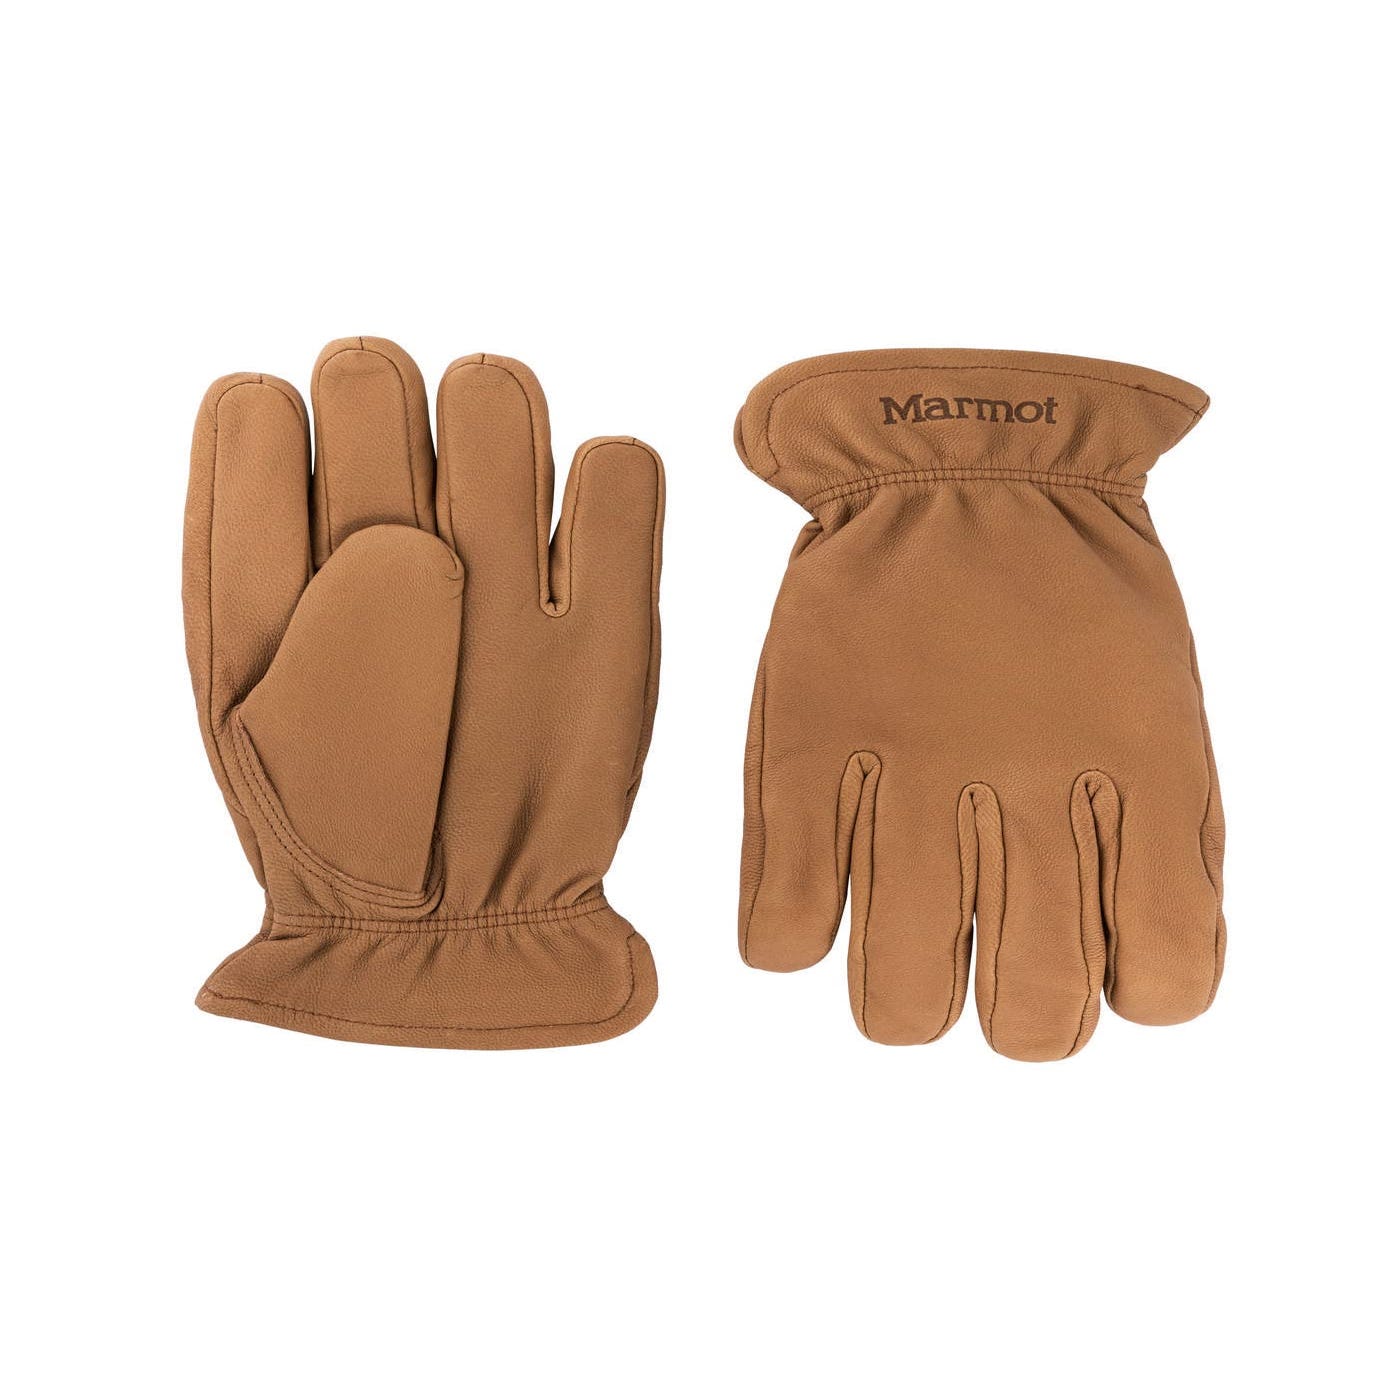 Marmot Uomo Basic Work Glove, guanti foderati in pelle, guanti da lavoro  robusti con fodera interna ad asciugatura rapida, Almond, S